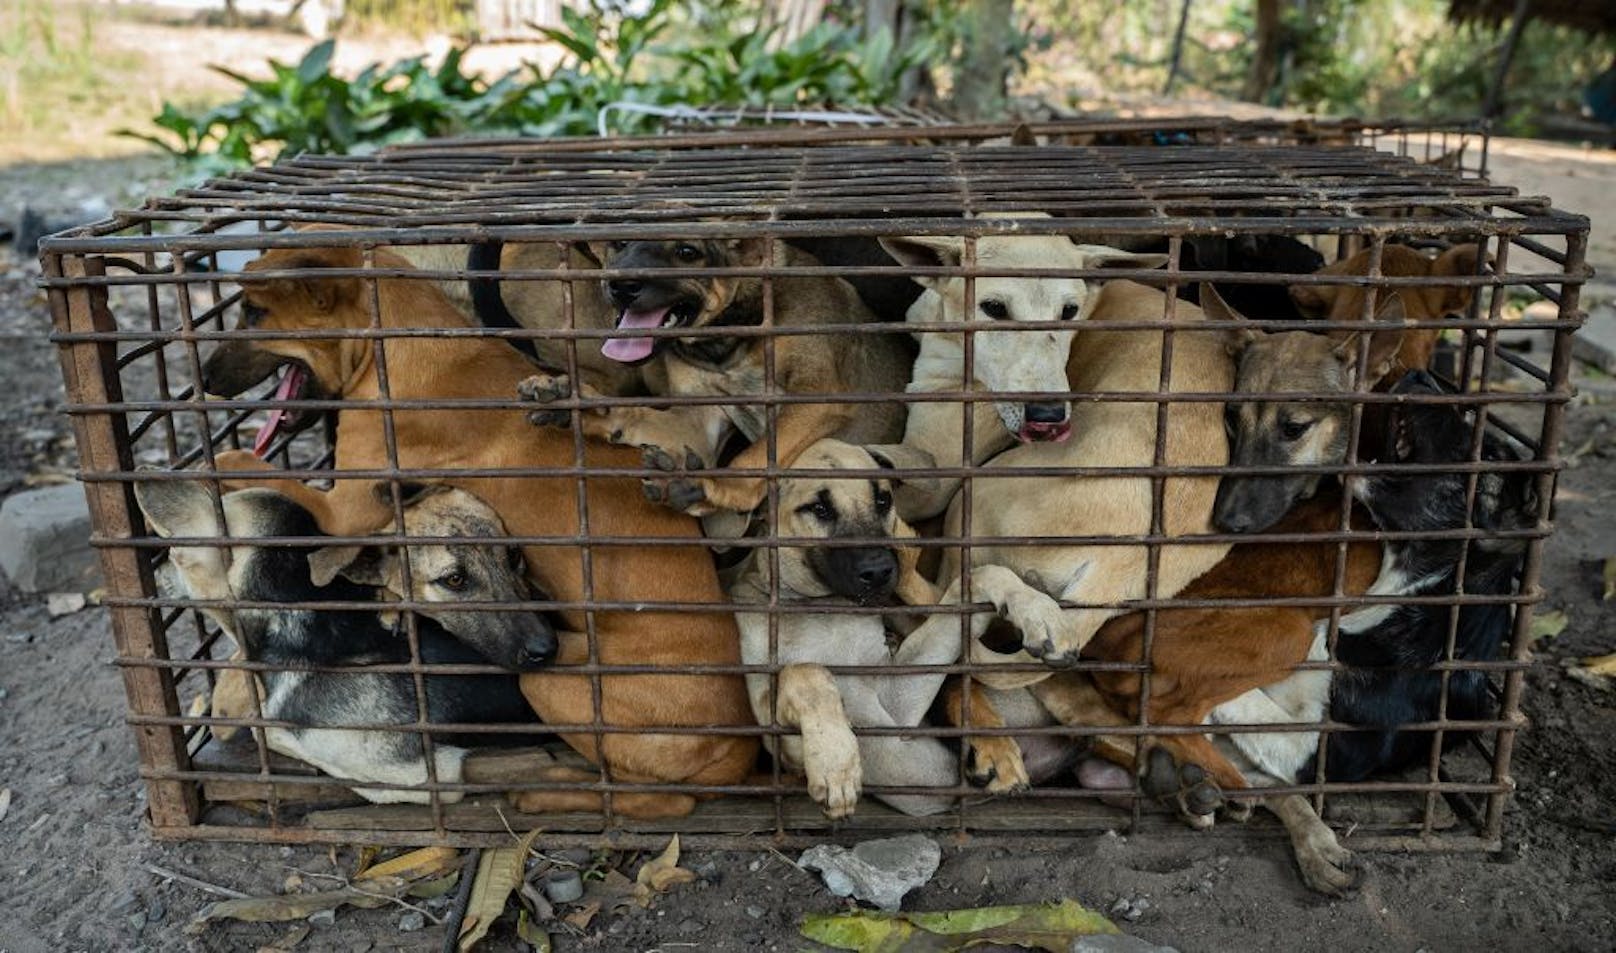 Na, Mahlzeit! 61 Hunde vor Schlachtung gerettet